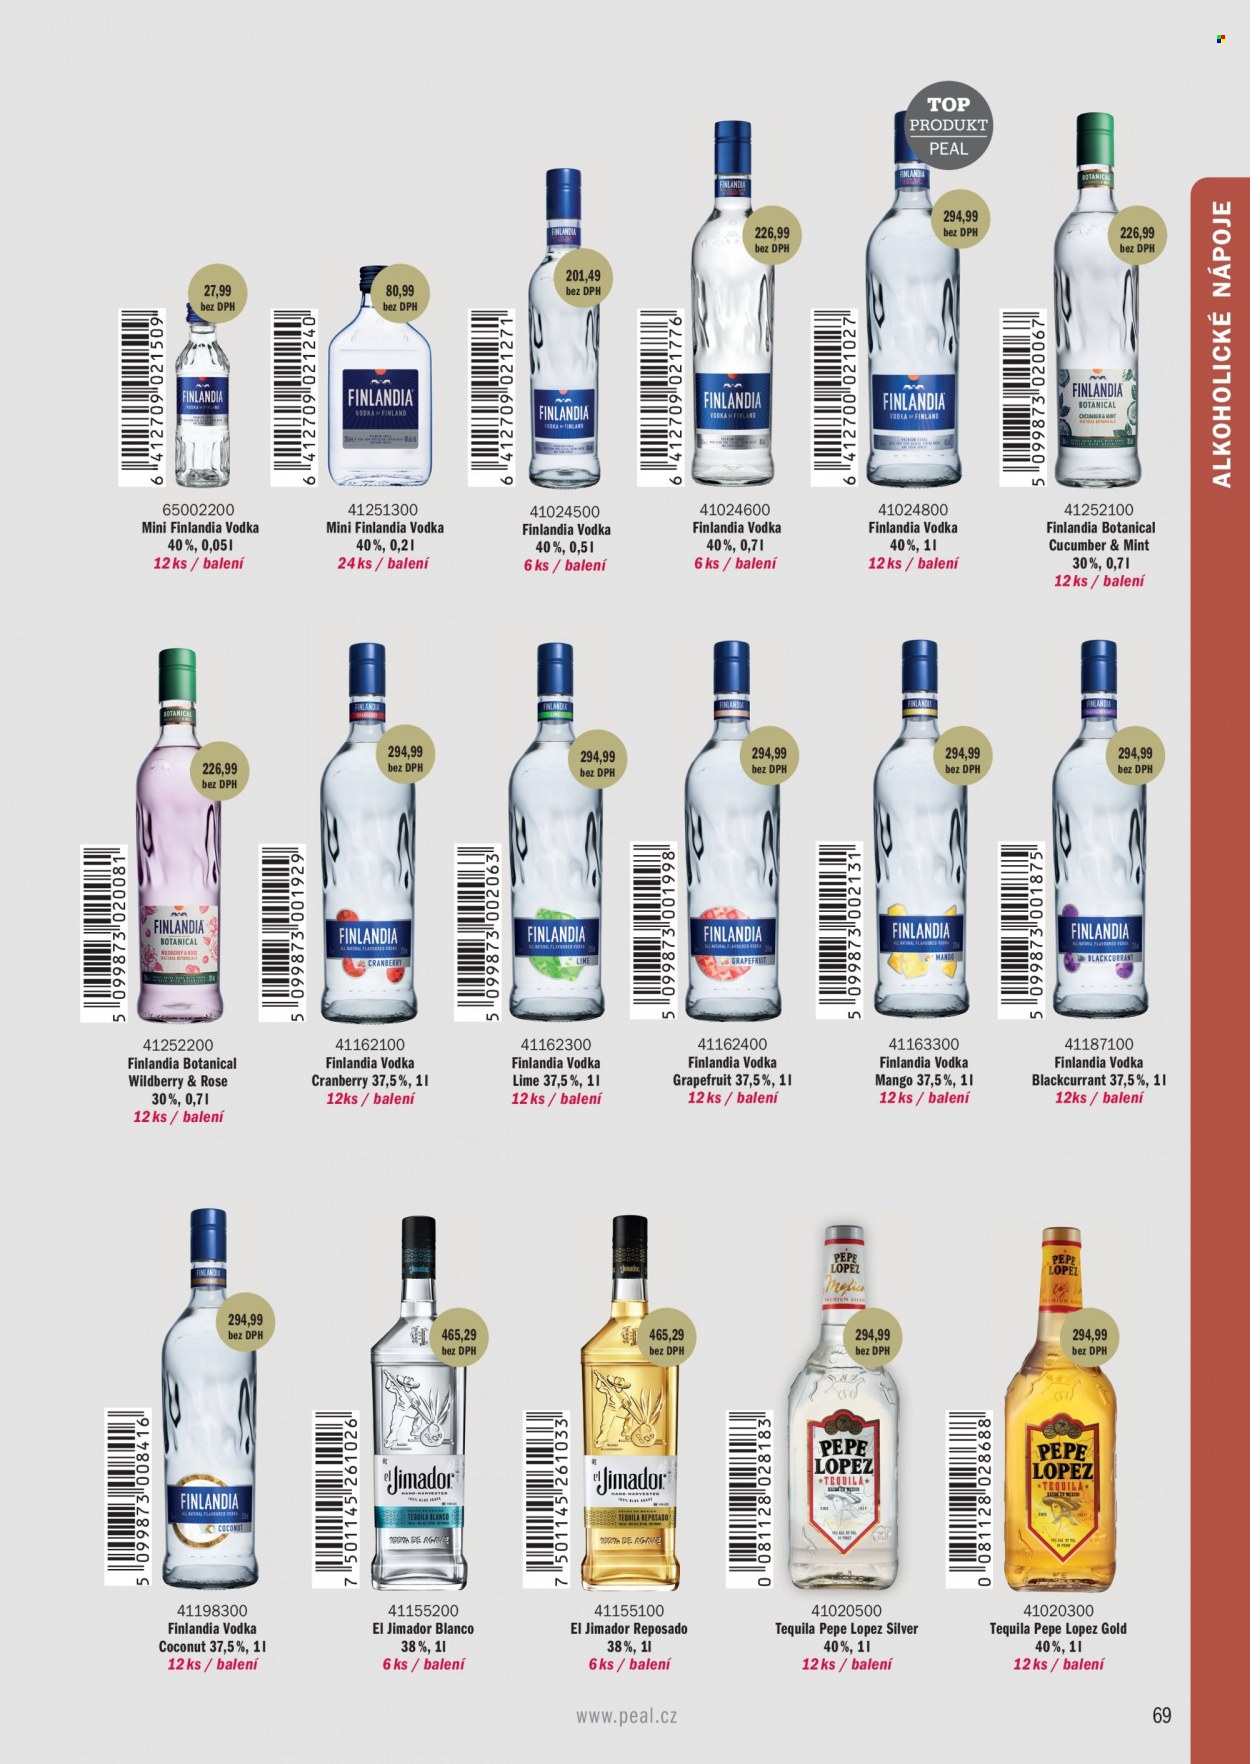 thumbnail - Leták PEAL - Produkty v akci - alkohol, vodka, tequila, Finlandia, El Jimador, Pepe Lopez. Strana 27.